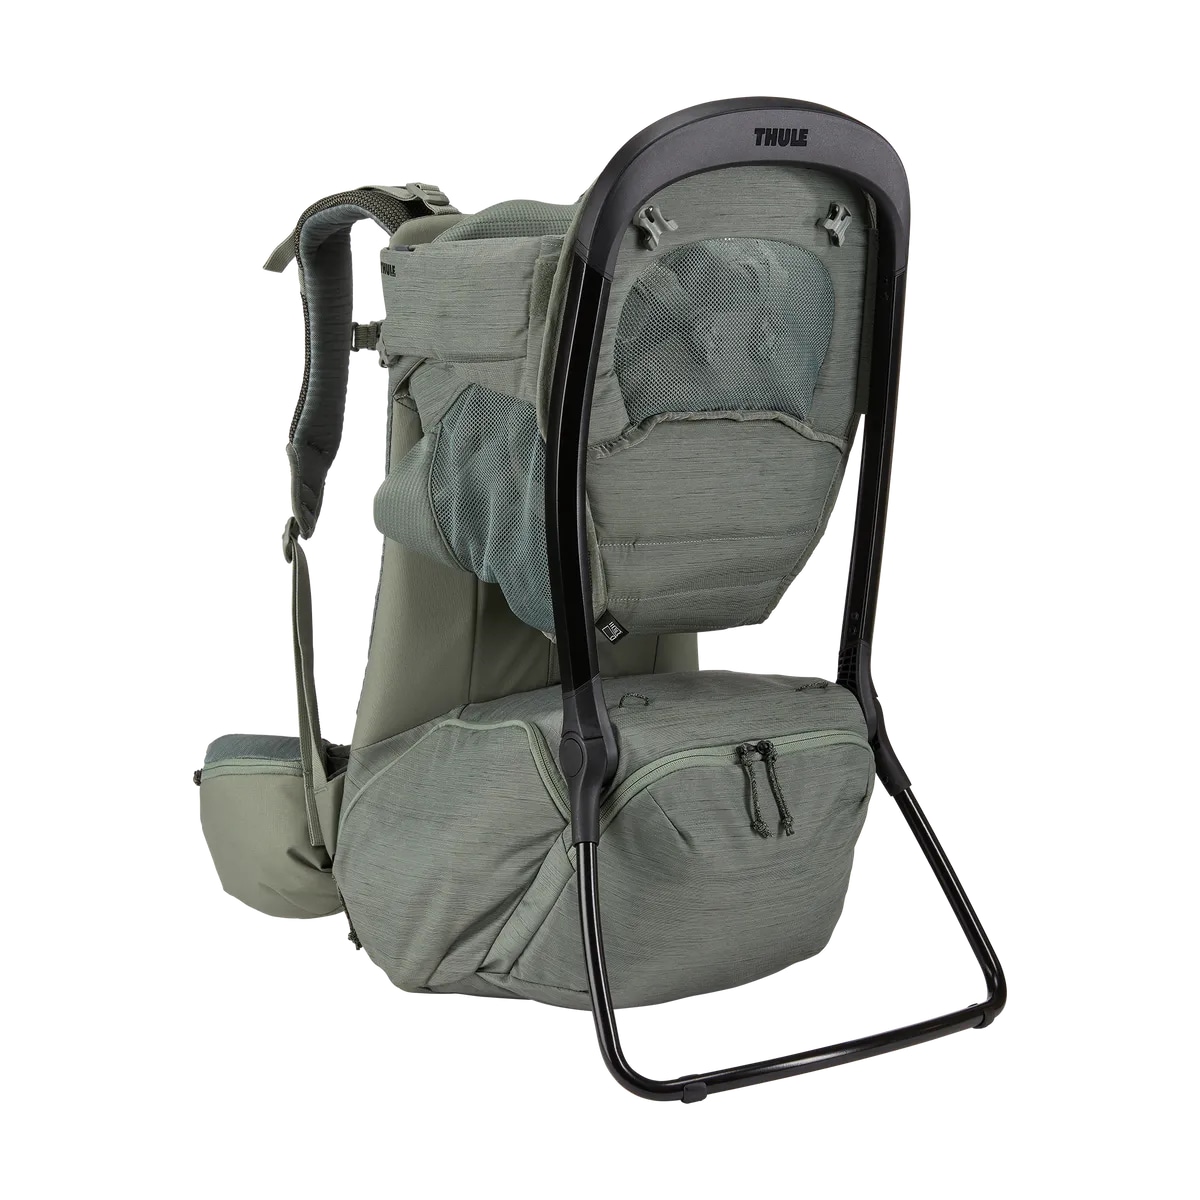 Sapling Child Carrier Backpack Agave